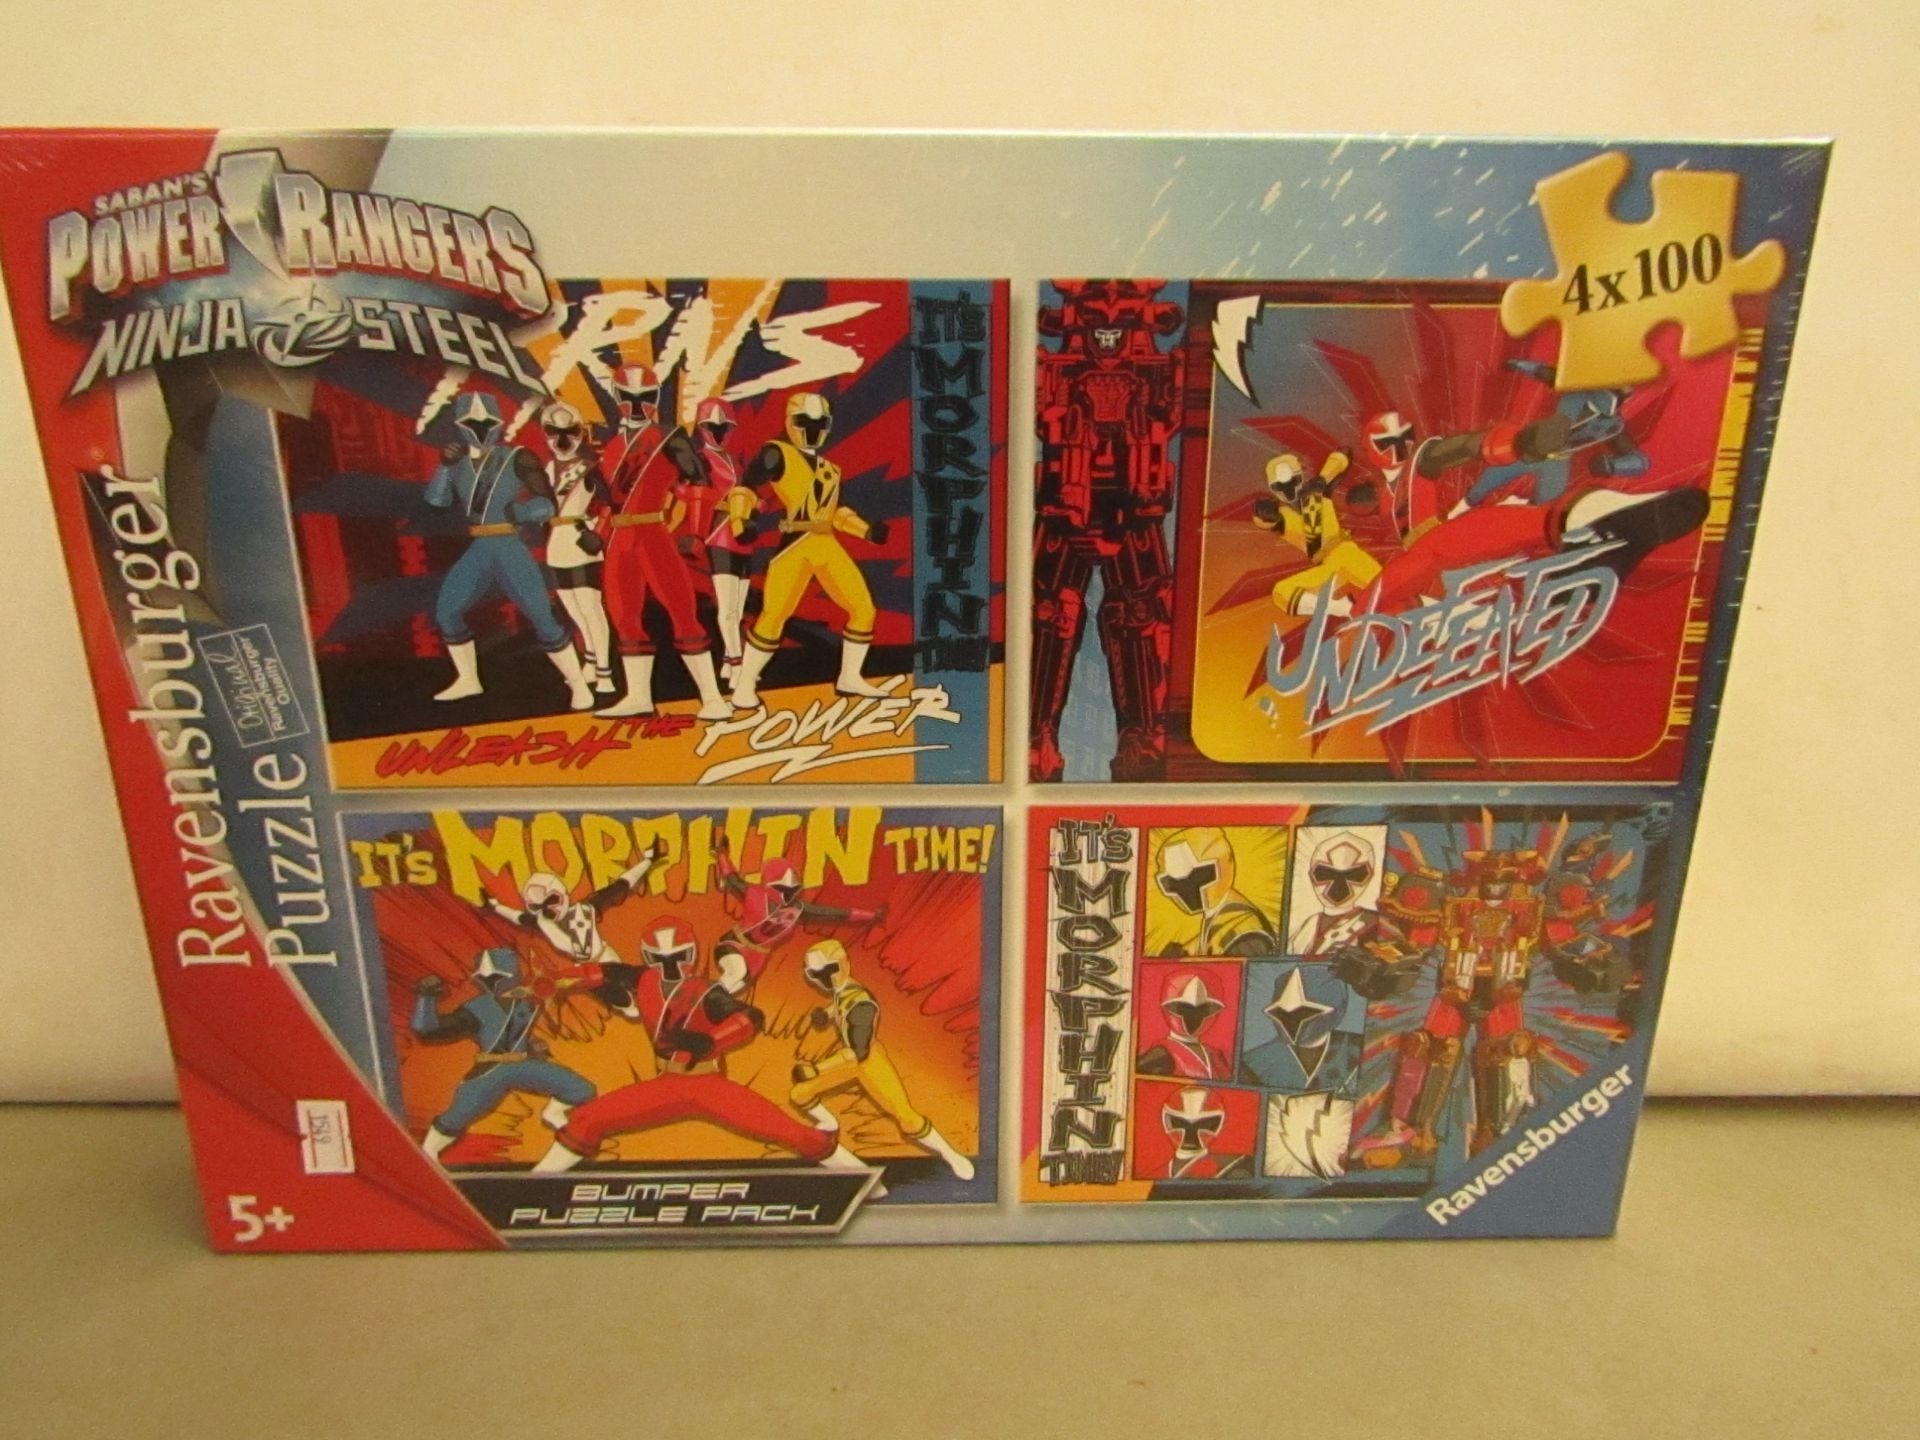 Sabans Power Rangers Ninja Steel Jigsaws. 4 x 100 Piece in each pack. New & In Sealed Boxes